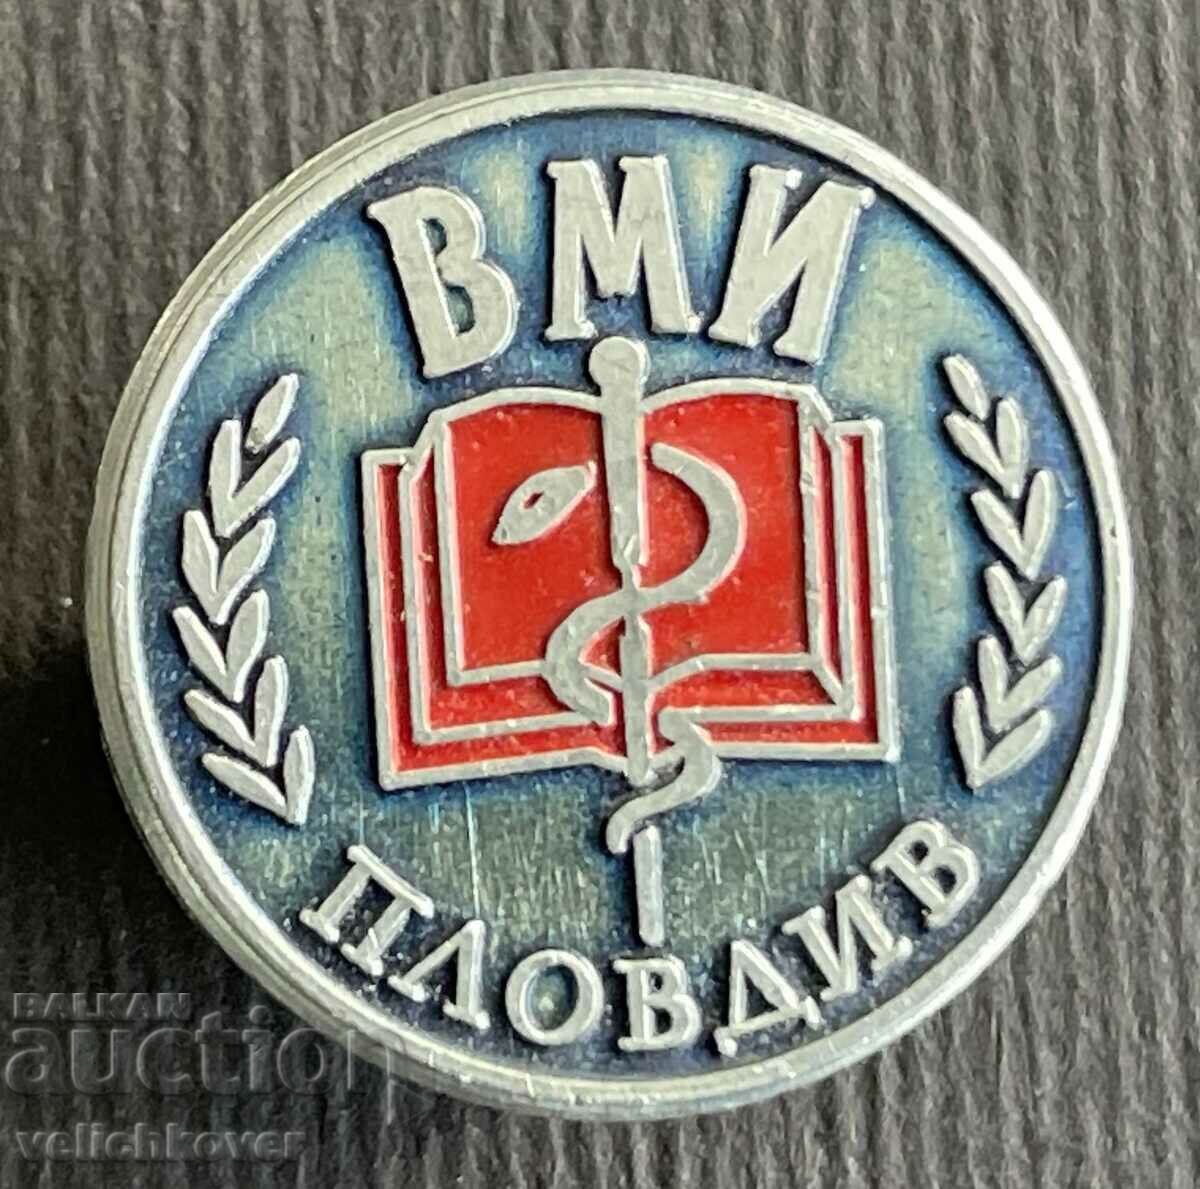 36967 България знак ВМИ Висш Медицински институт Пловдив